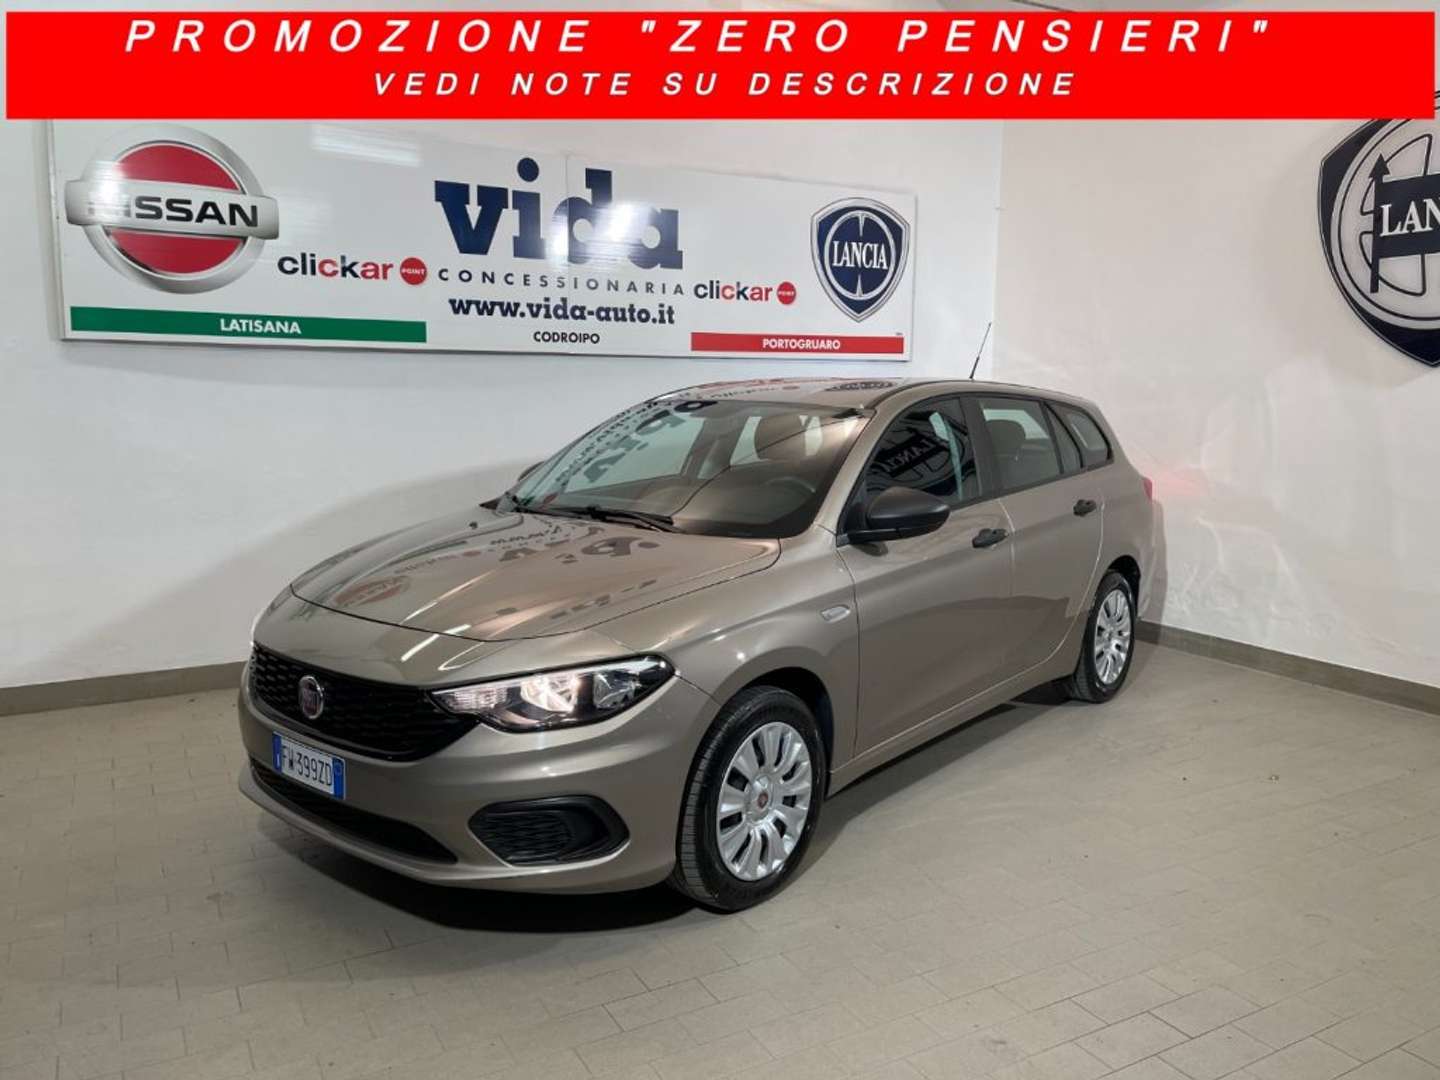 usato Fiat Tipo Station wagon a Latisana - Udine per € 15.300,-